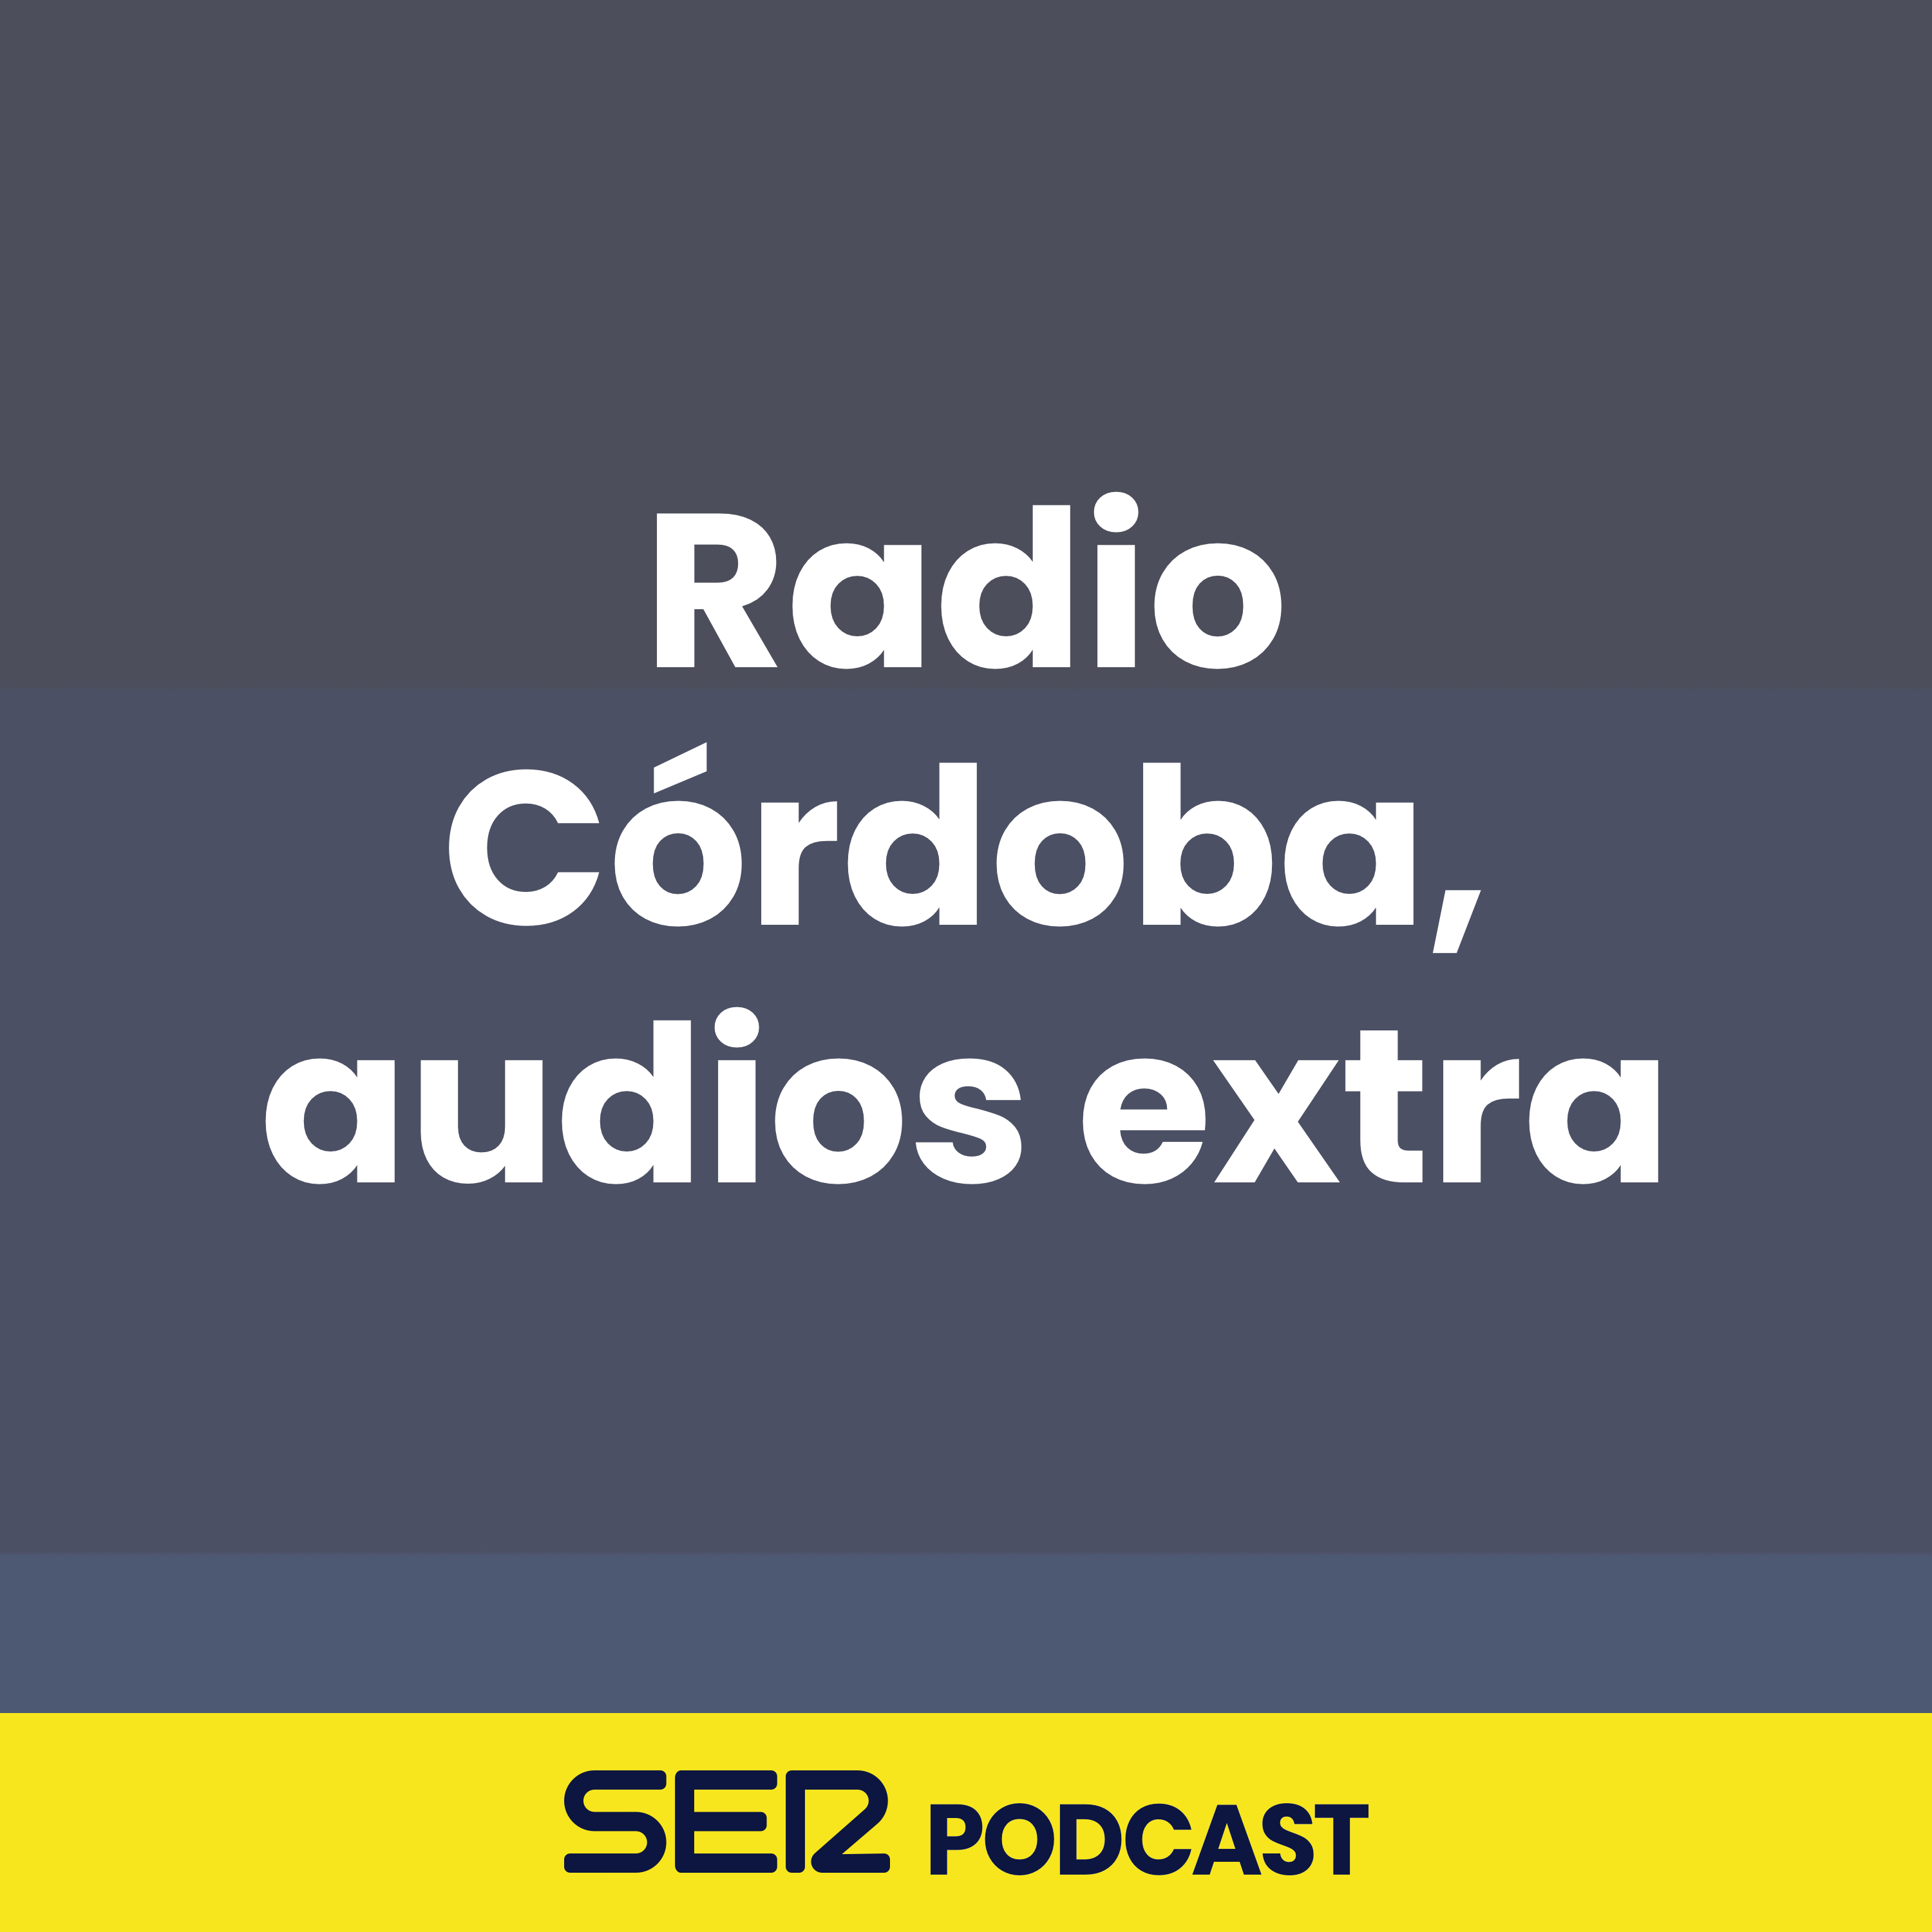 Radio Córdoba, audios extra